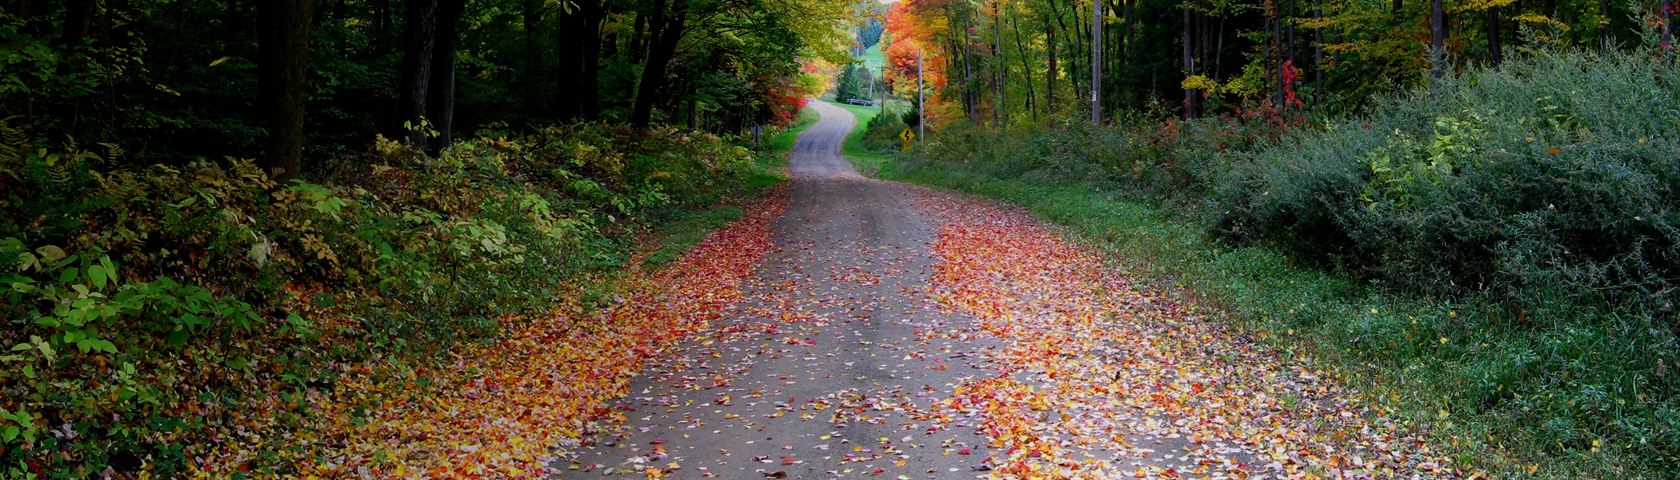 Squiggly Road Autumn